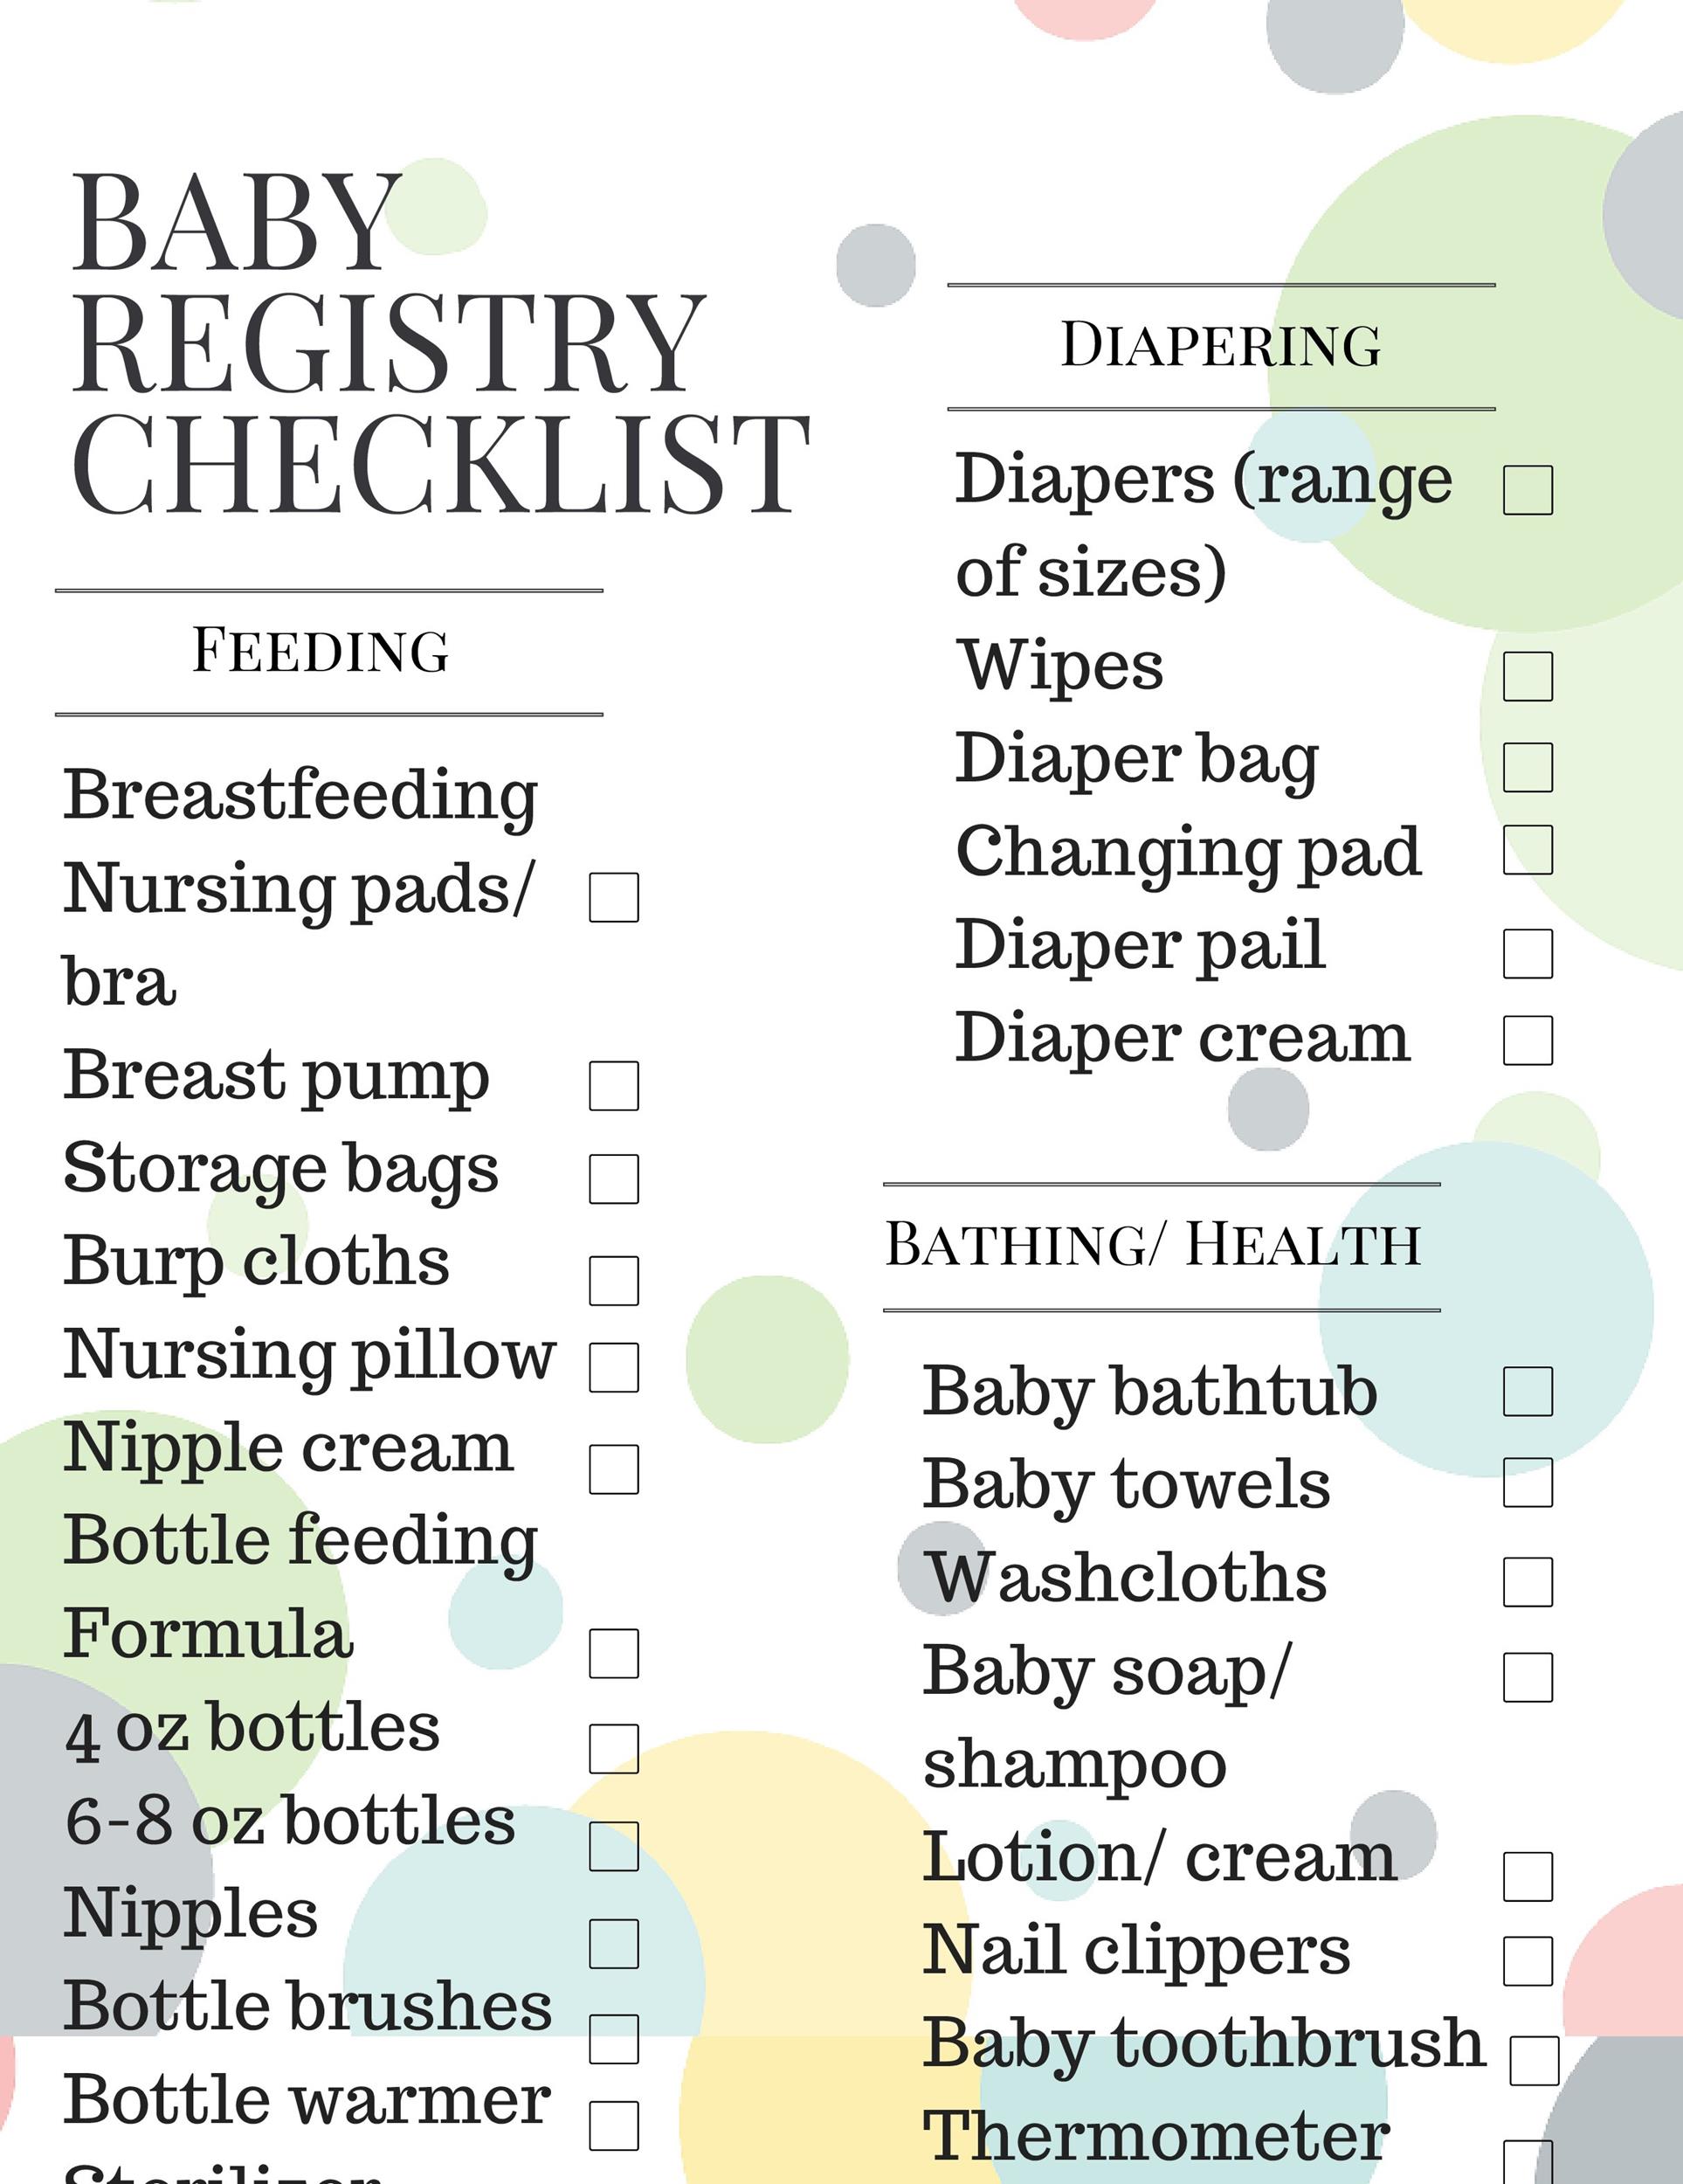 necessary baby registry items